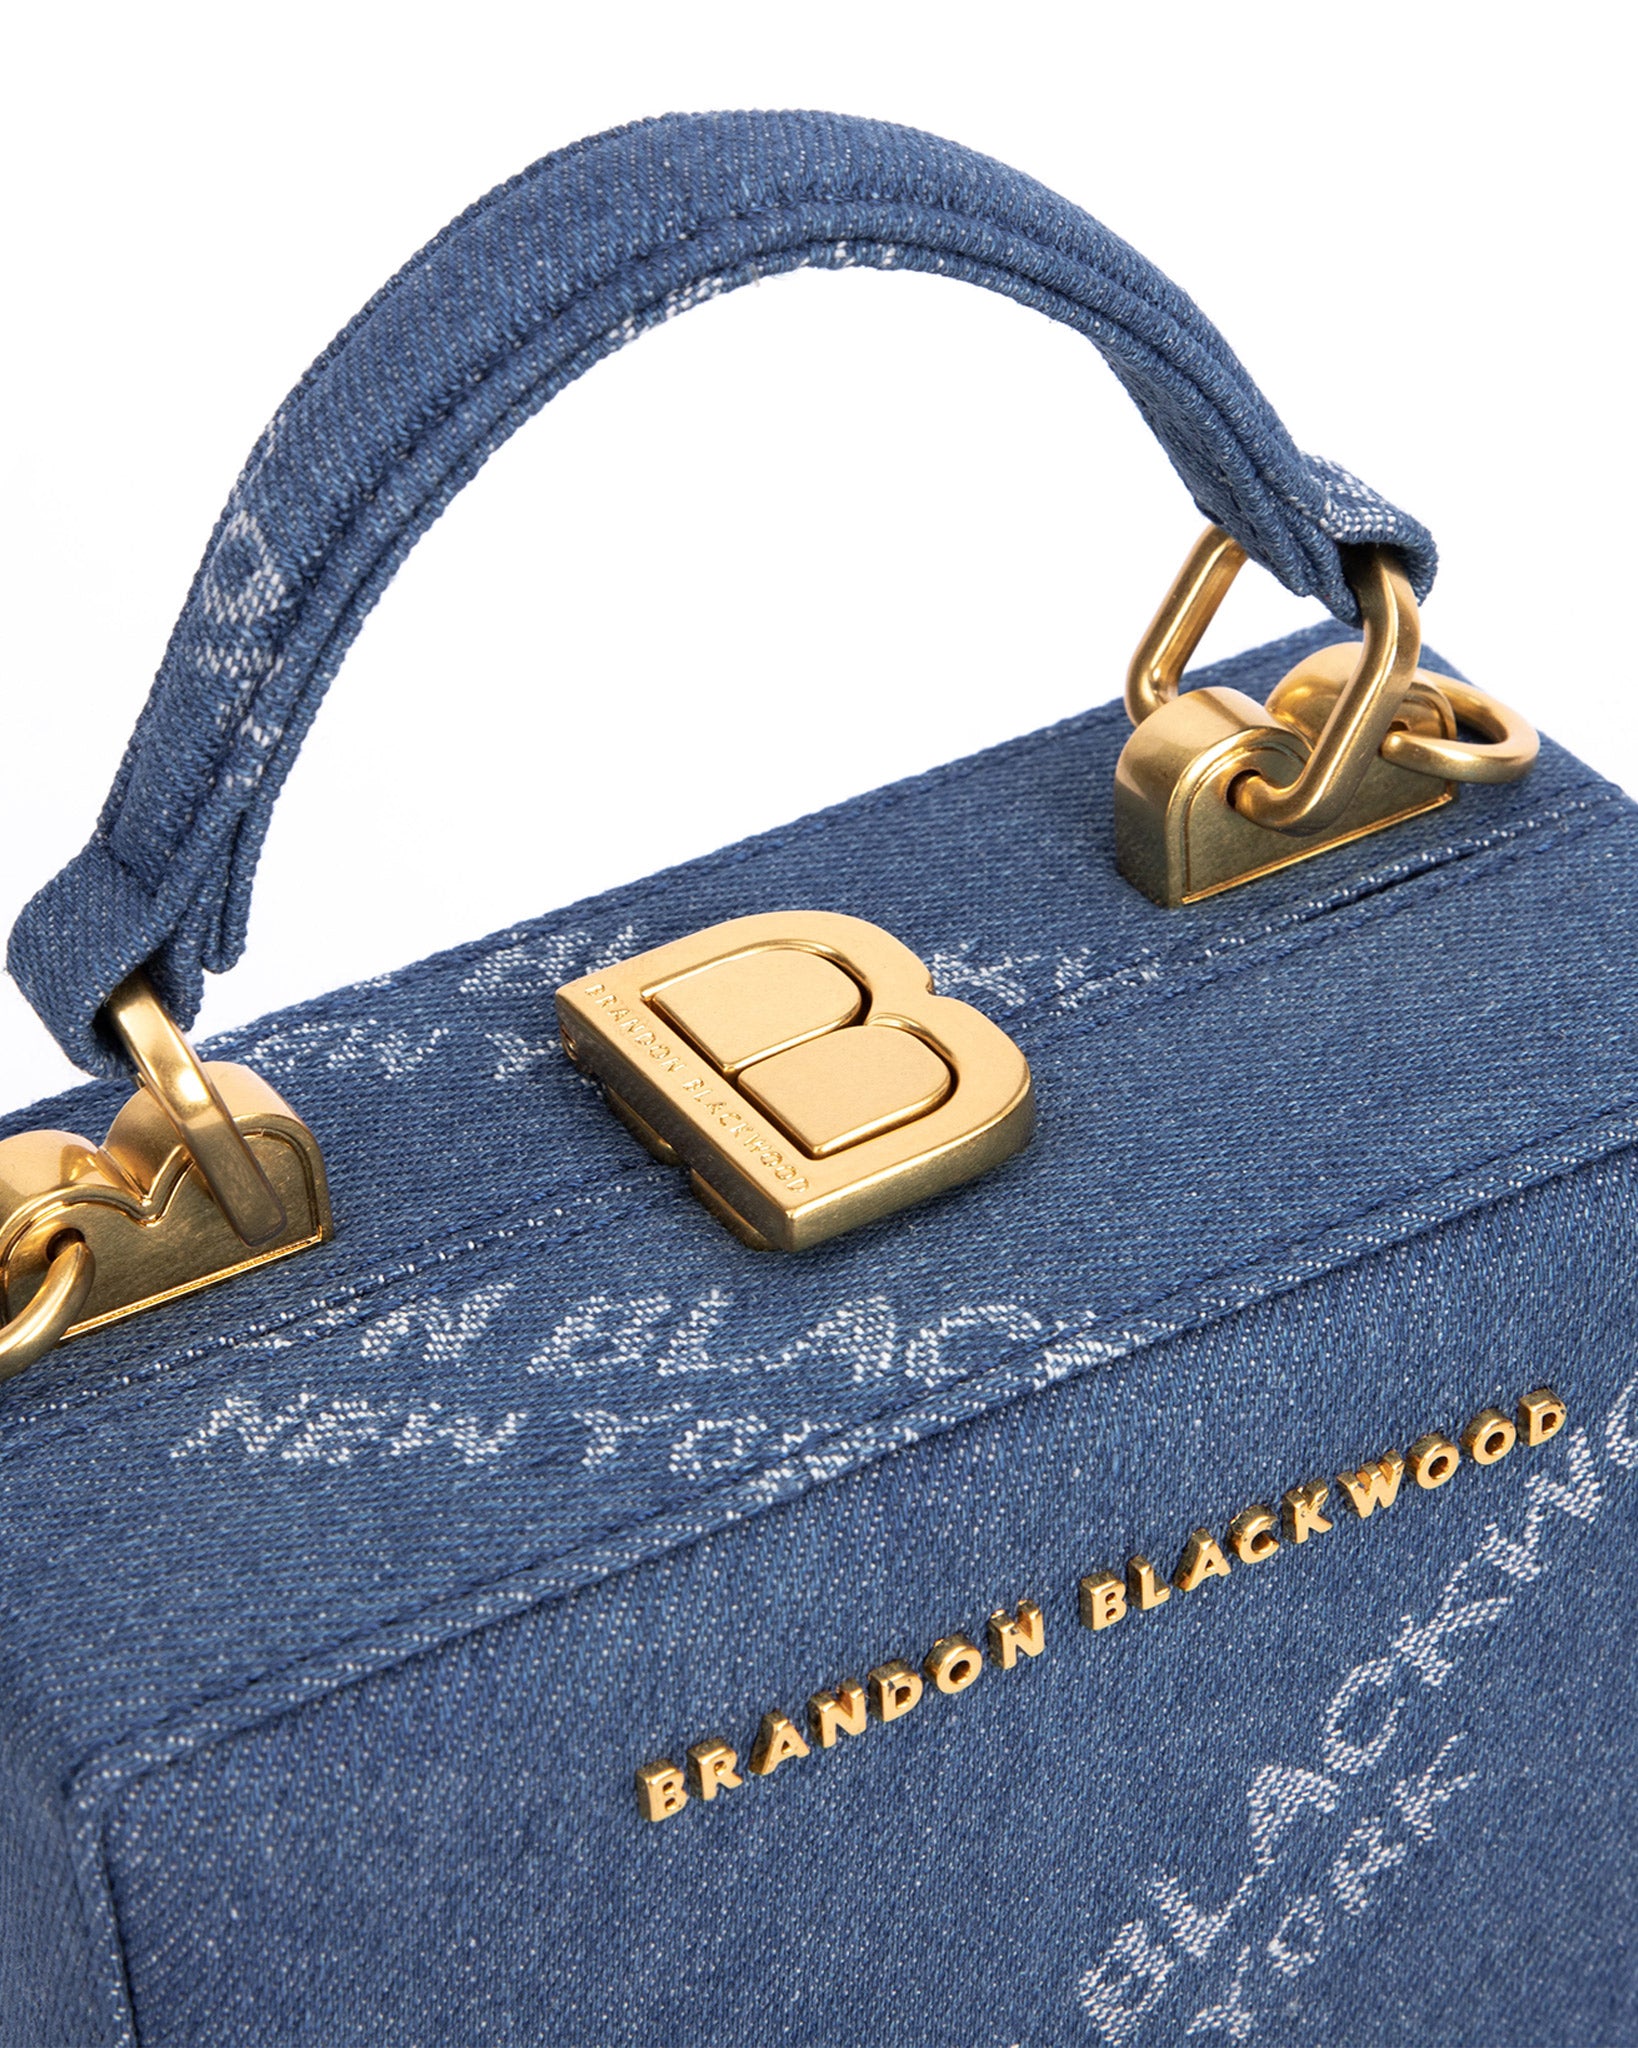 Brandon Blackwood NYC